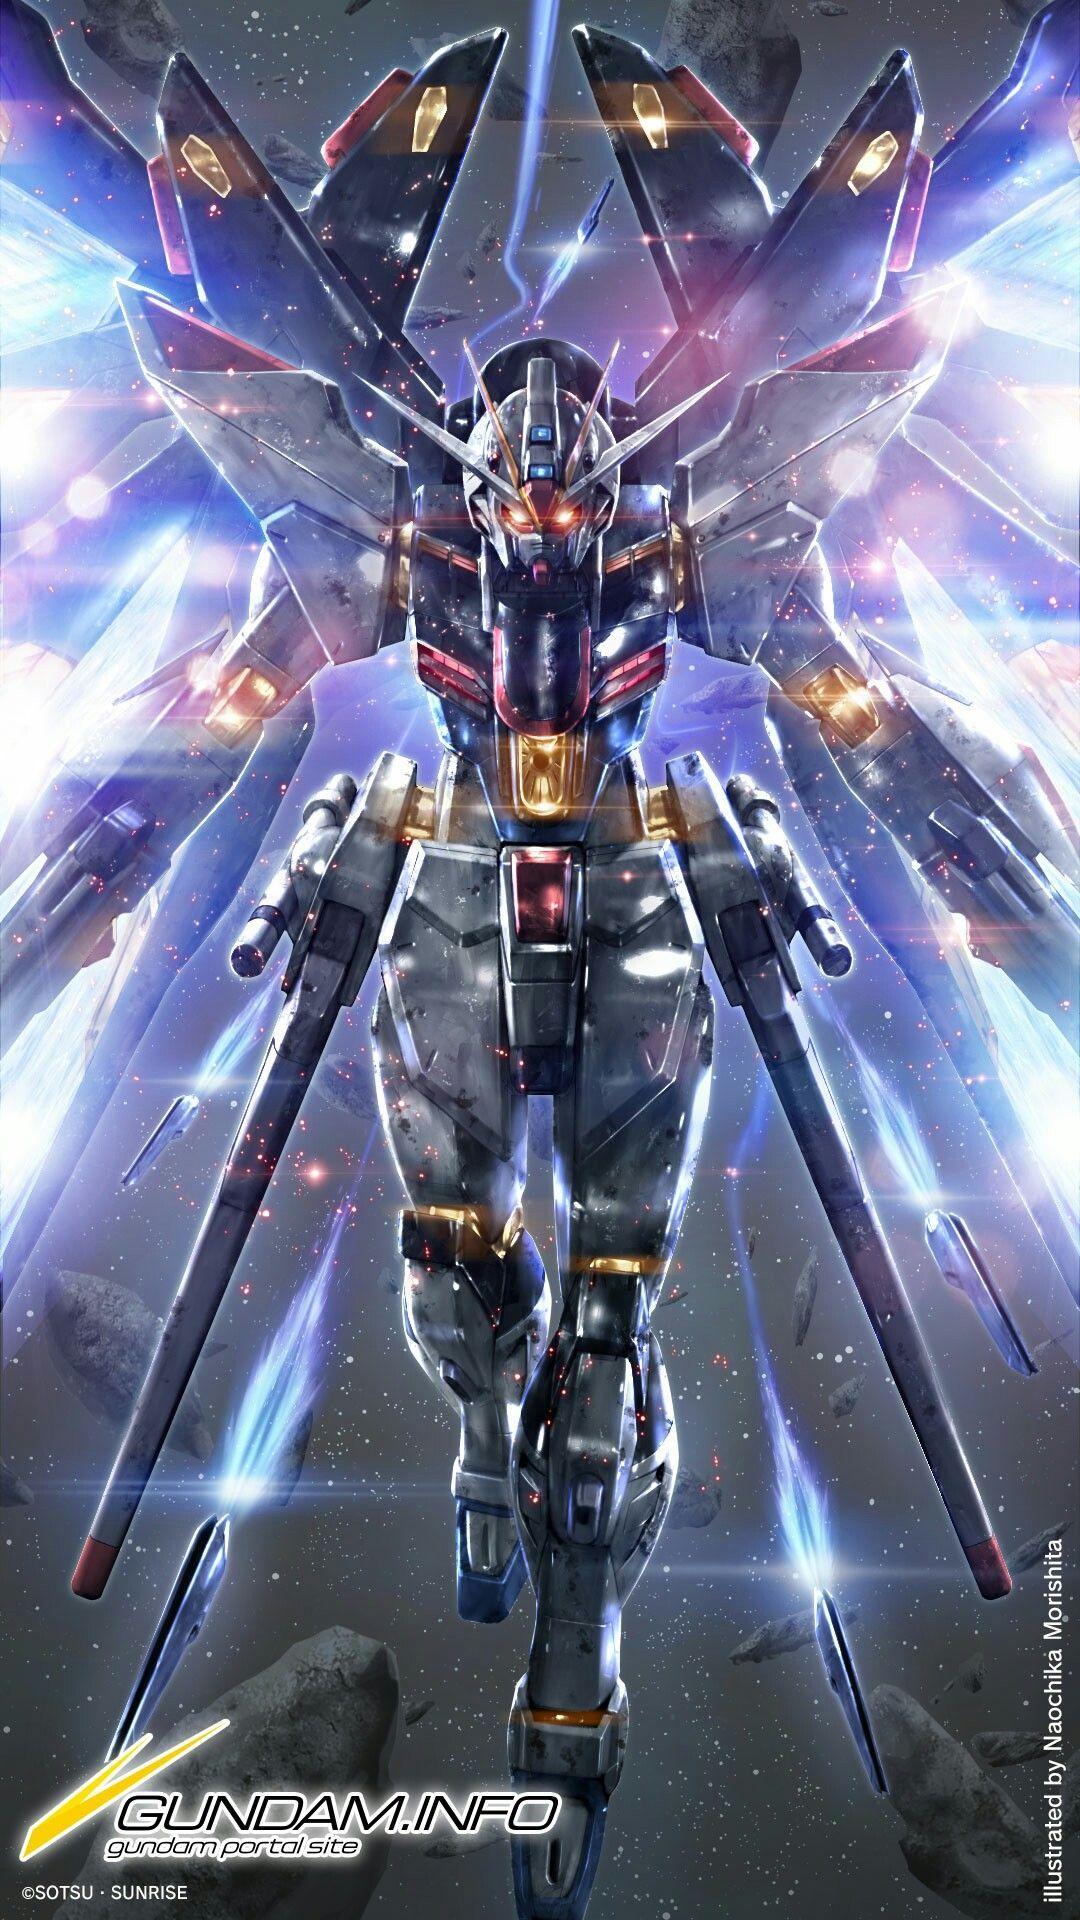 Freedom Gundam Wallpapers - Top Free Freedom Gundam Backgrounds ...